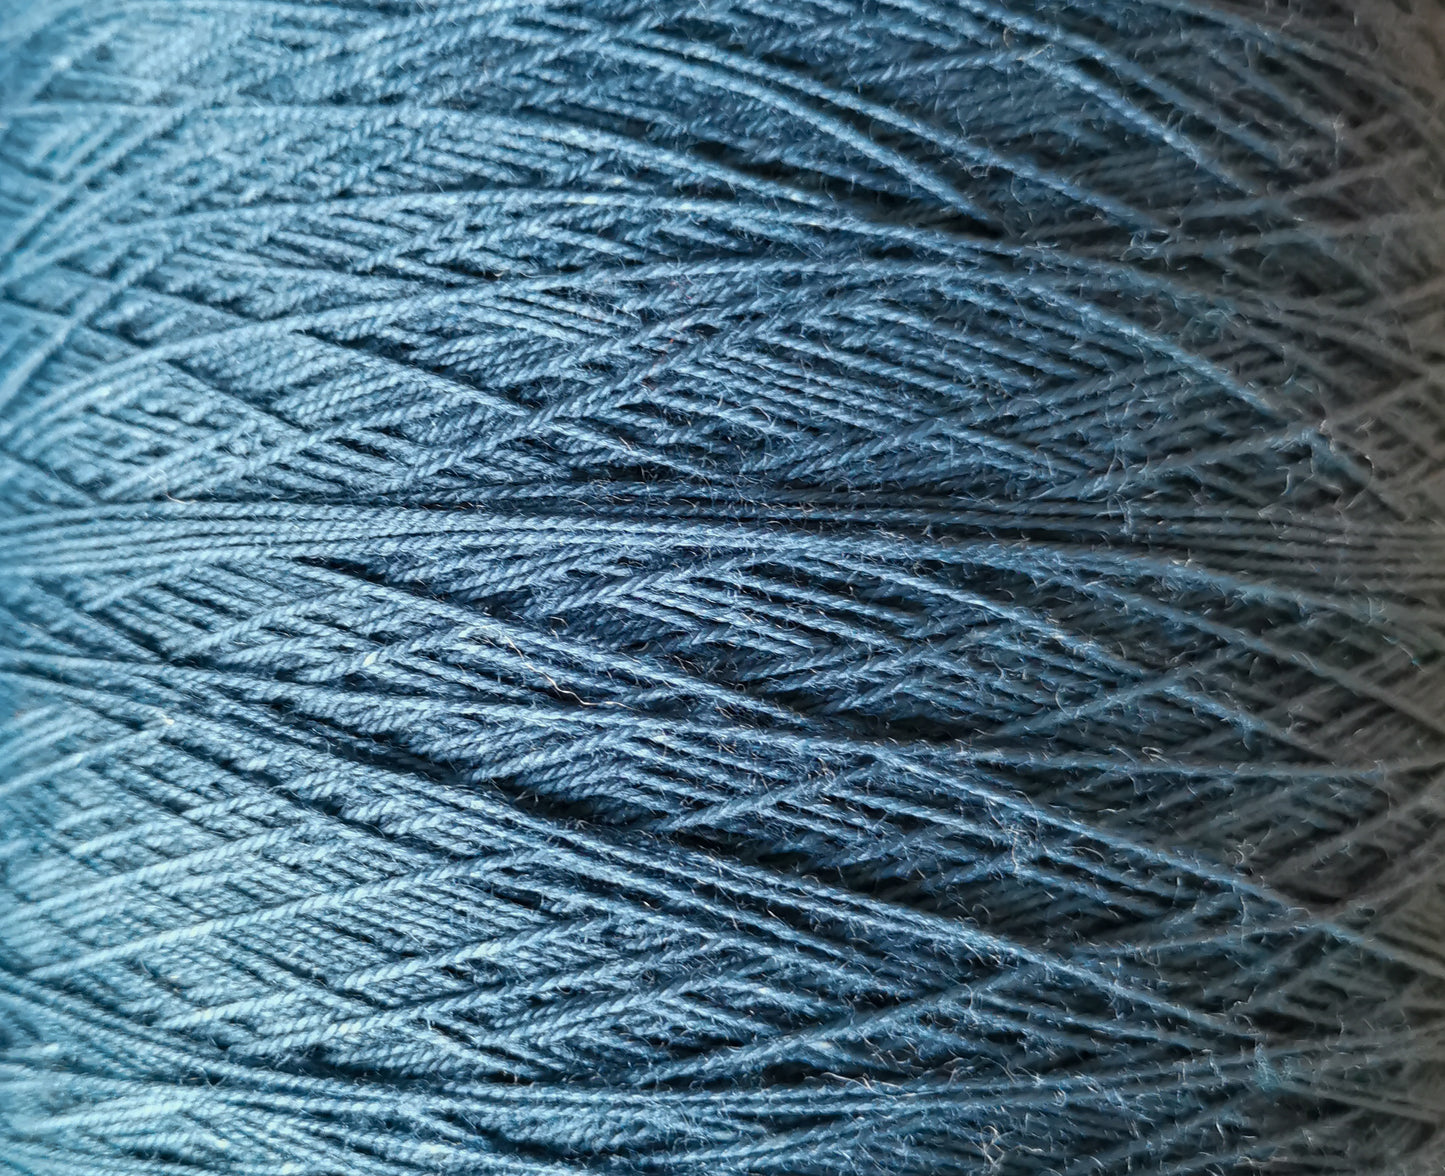 wool/nylon blend yarn in navy2 blue